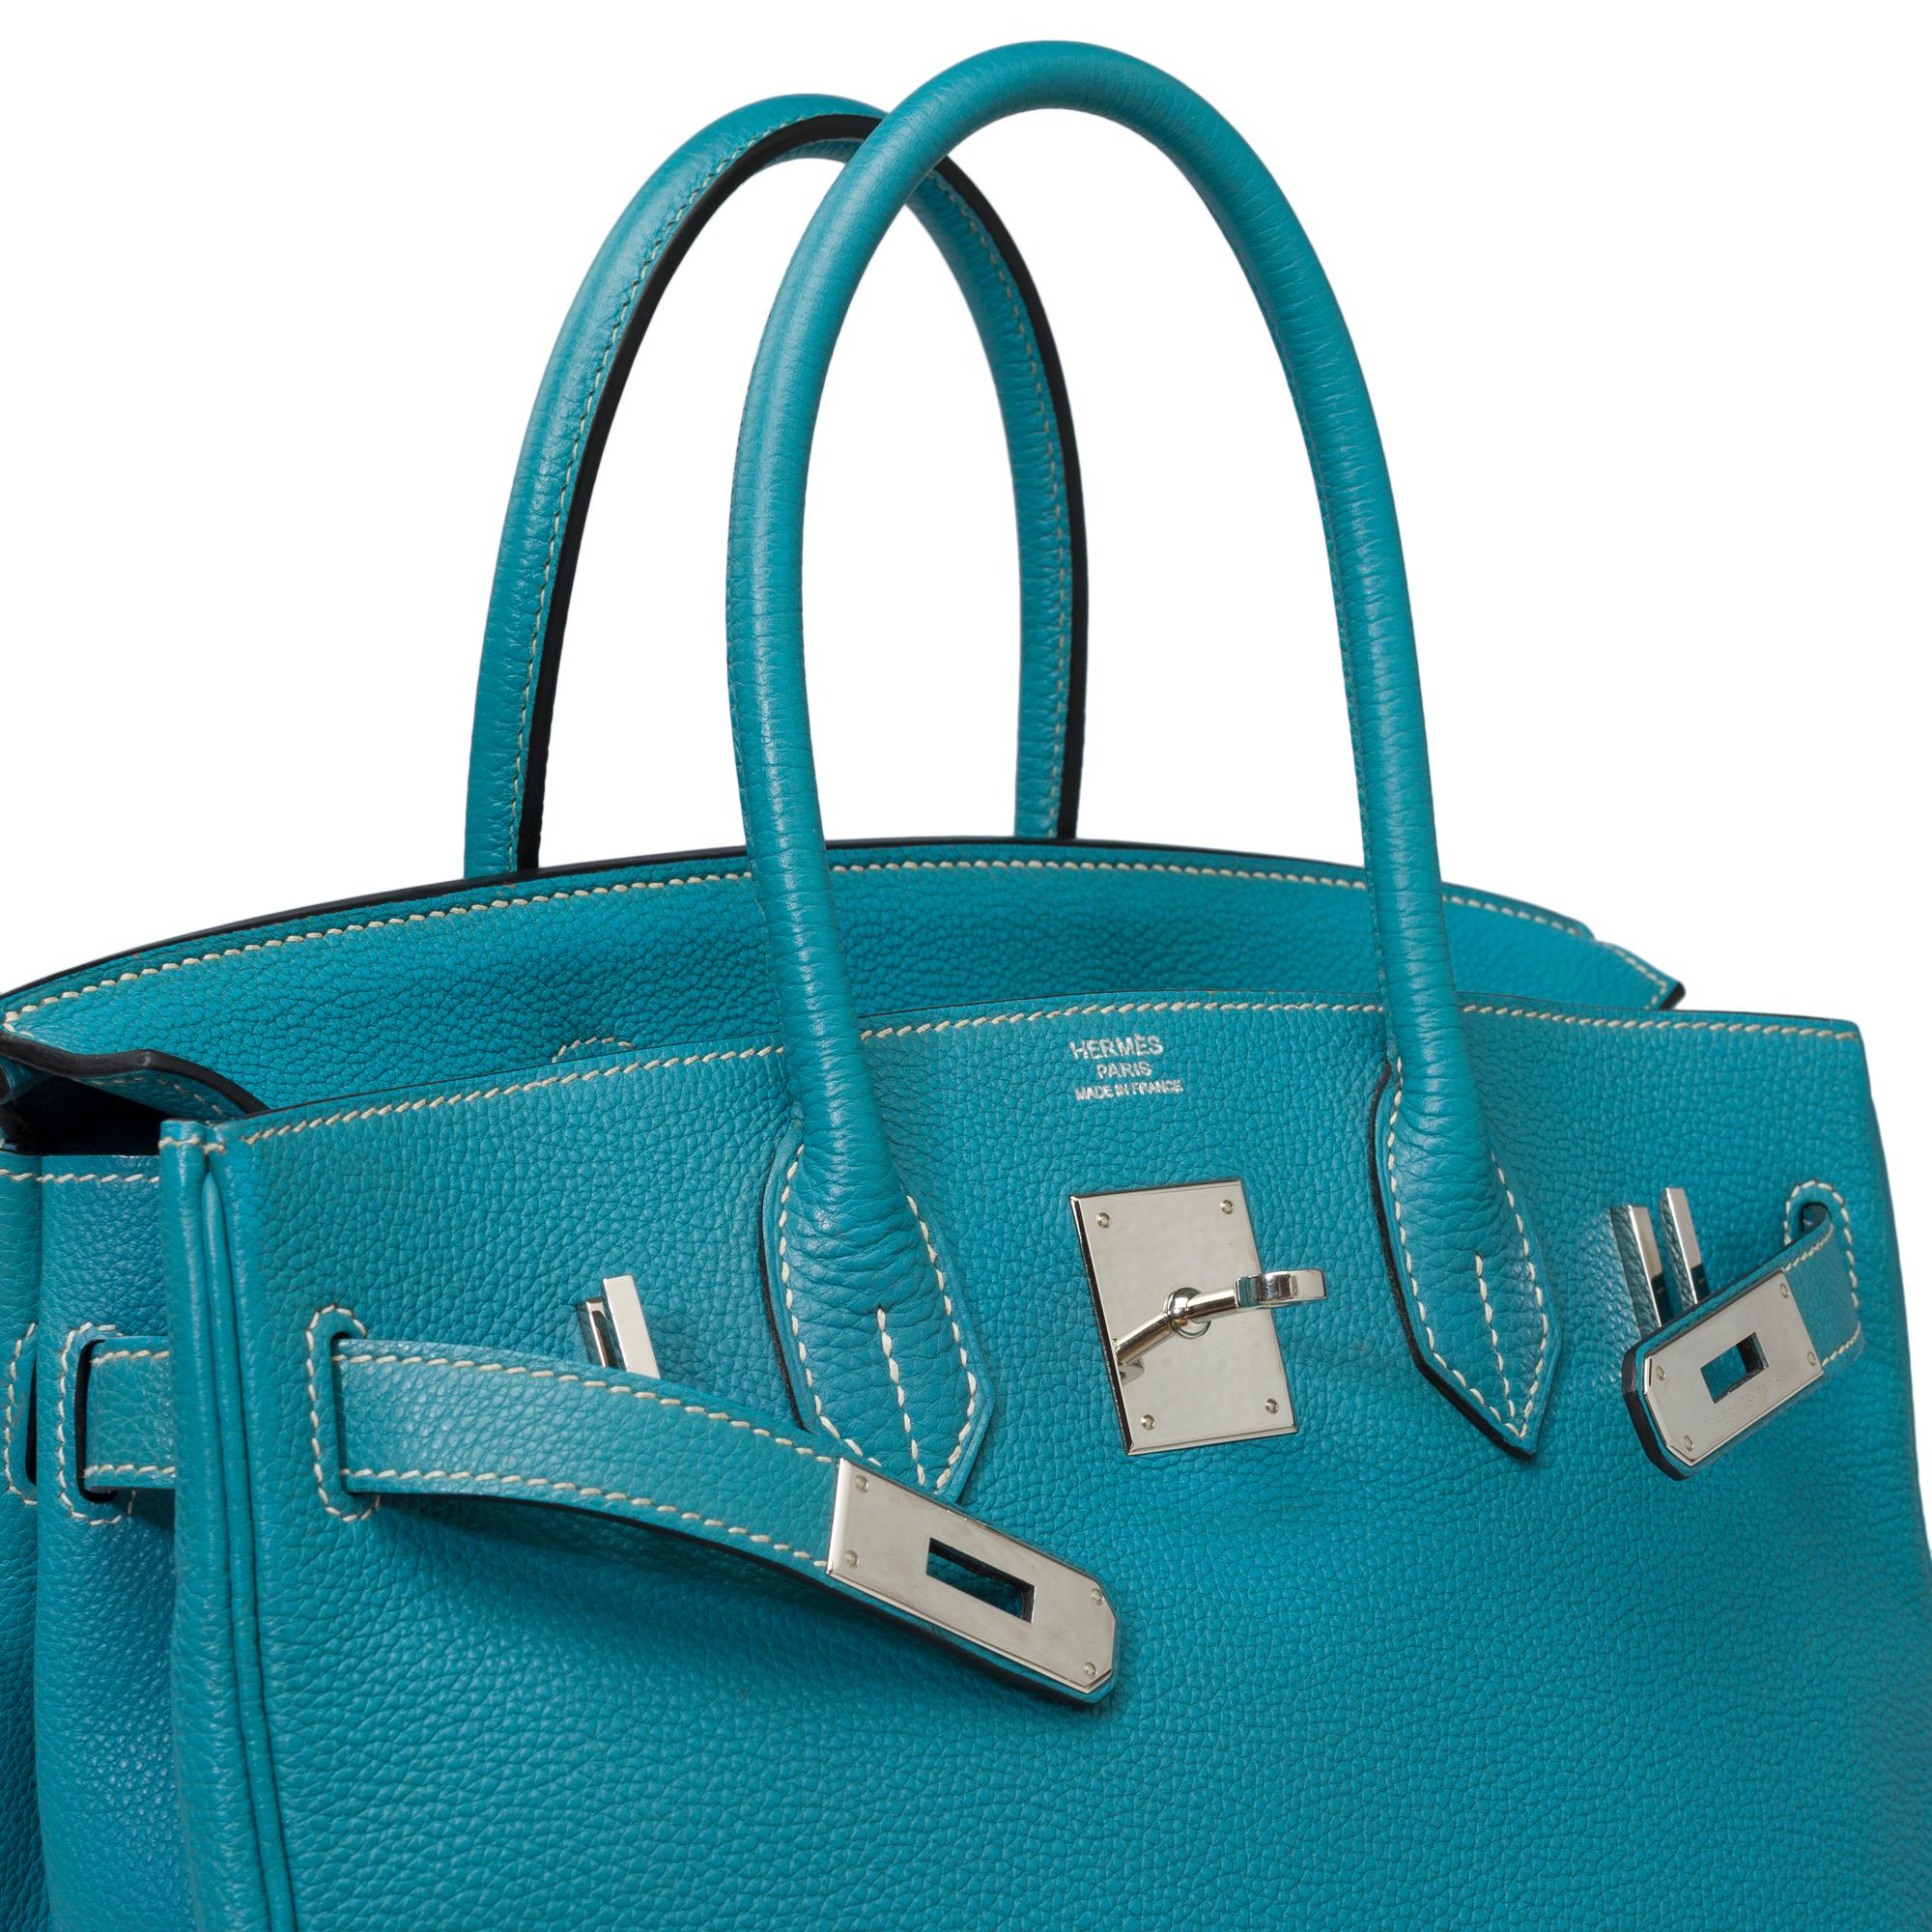 Splendid Hermes Birkin 30 handbag in Blue Jean Togo leather, SHW For Sale 3